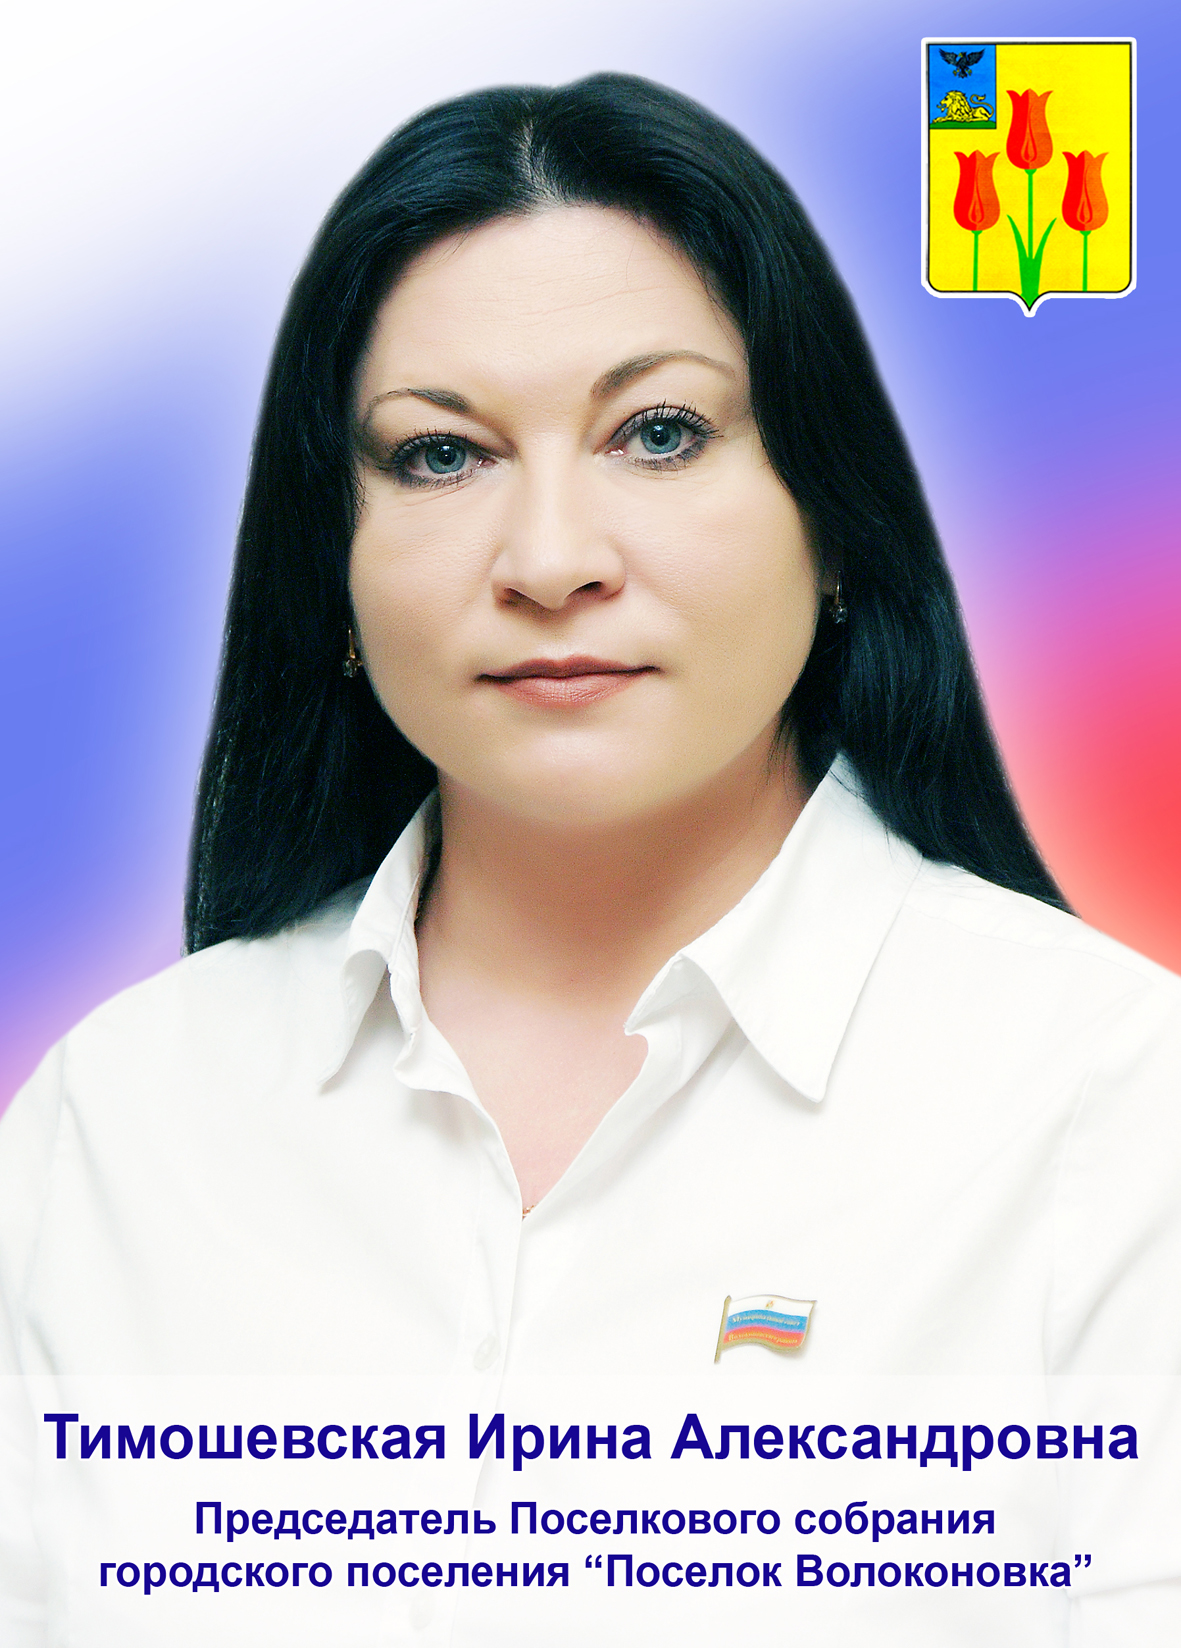 Тимошевская Ирина Александровна.